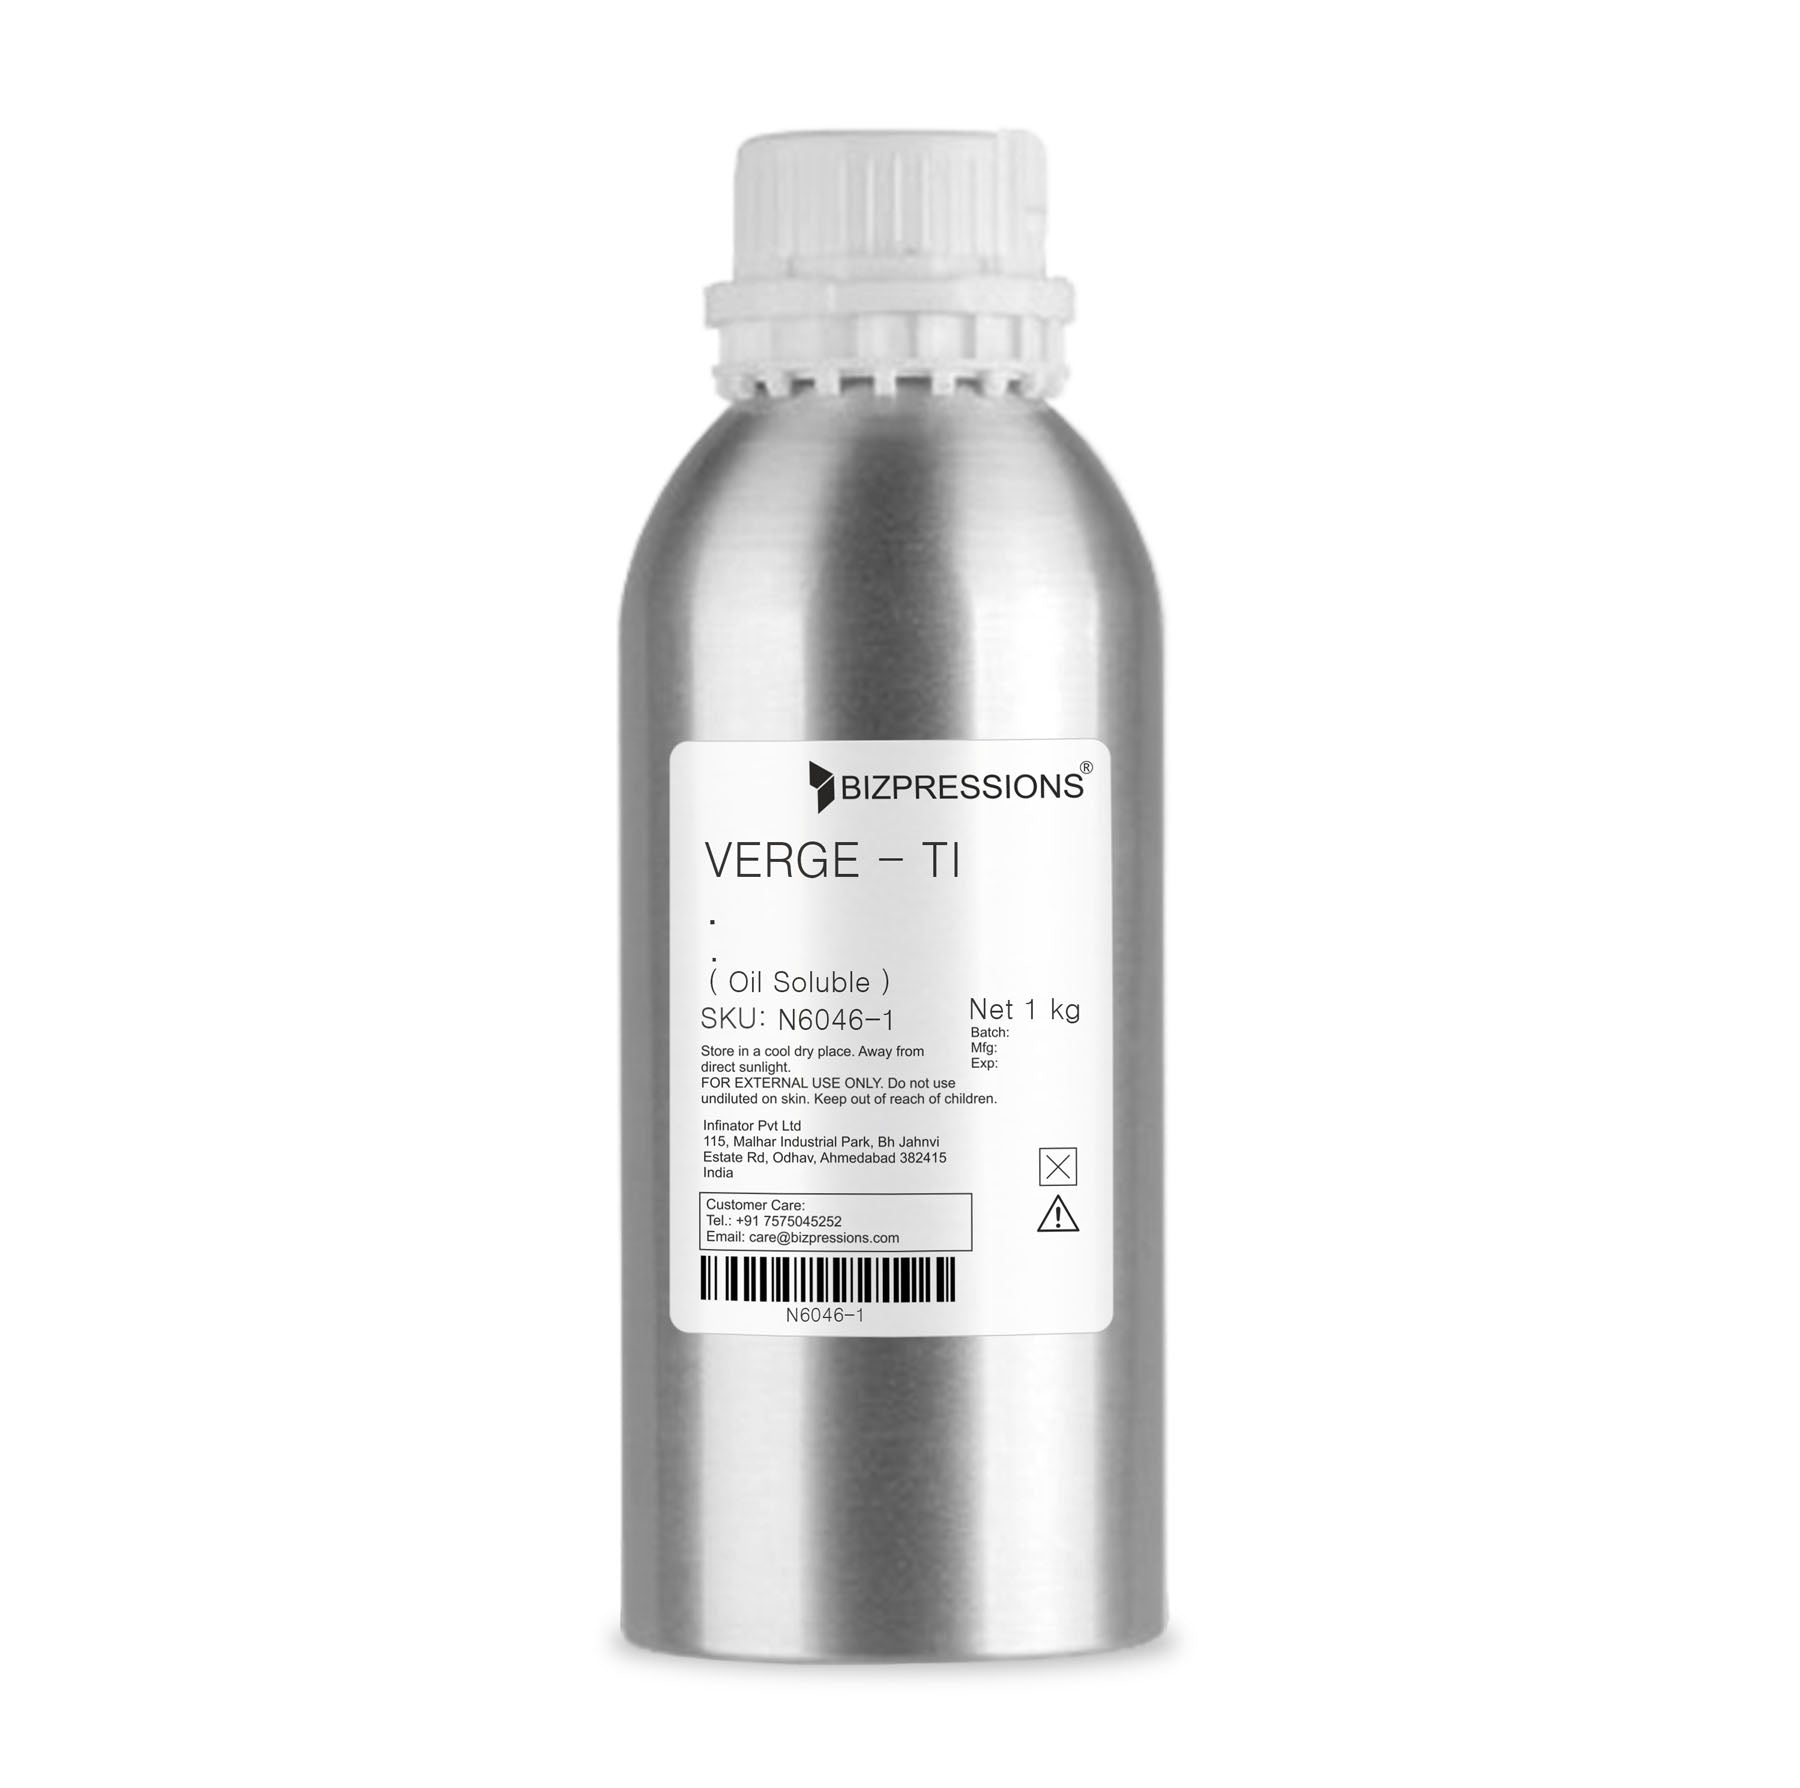 VERGE - TI - Fragrance ( Oil Soluble ) - 1 kg